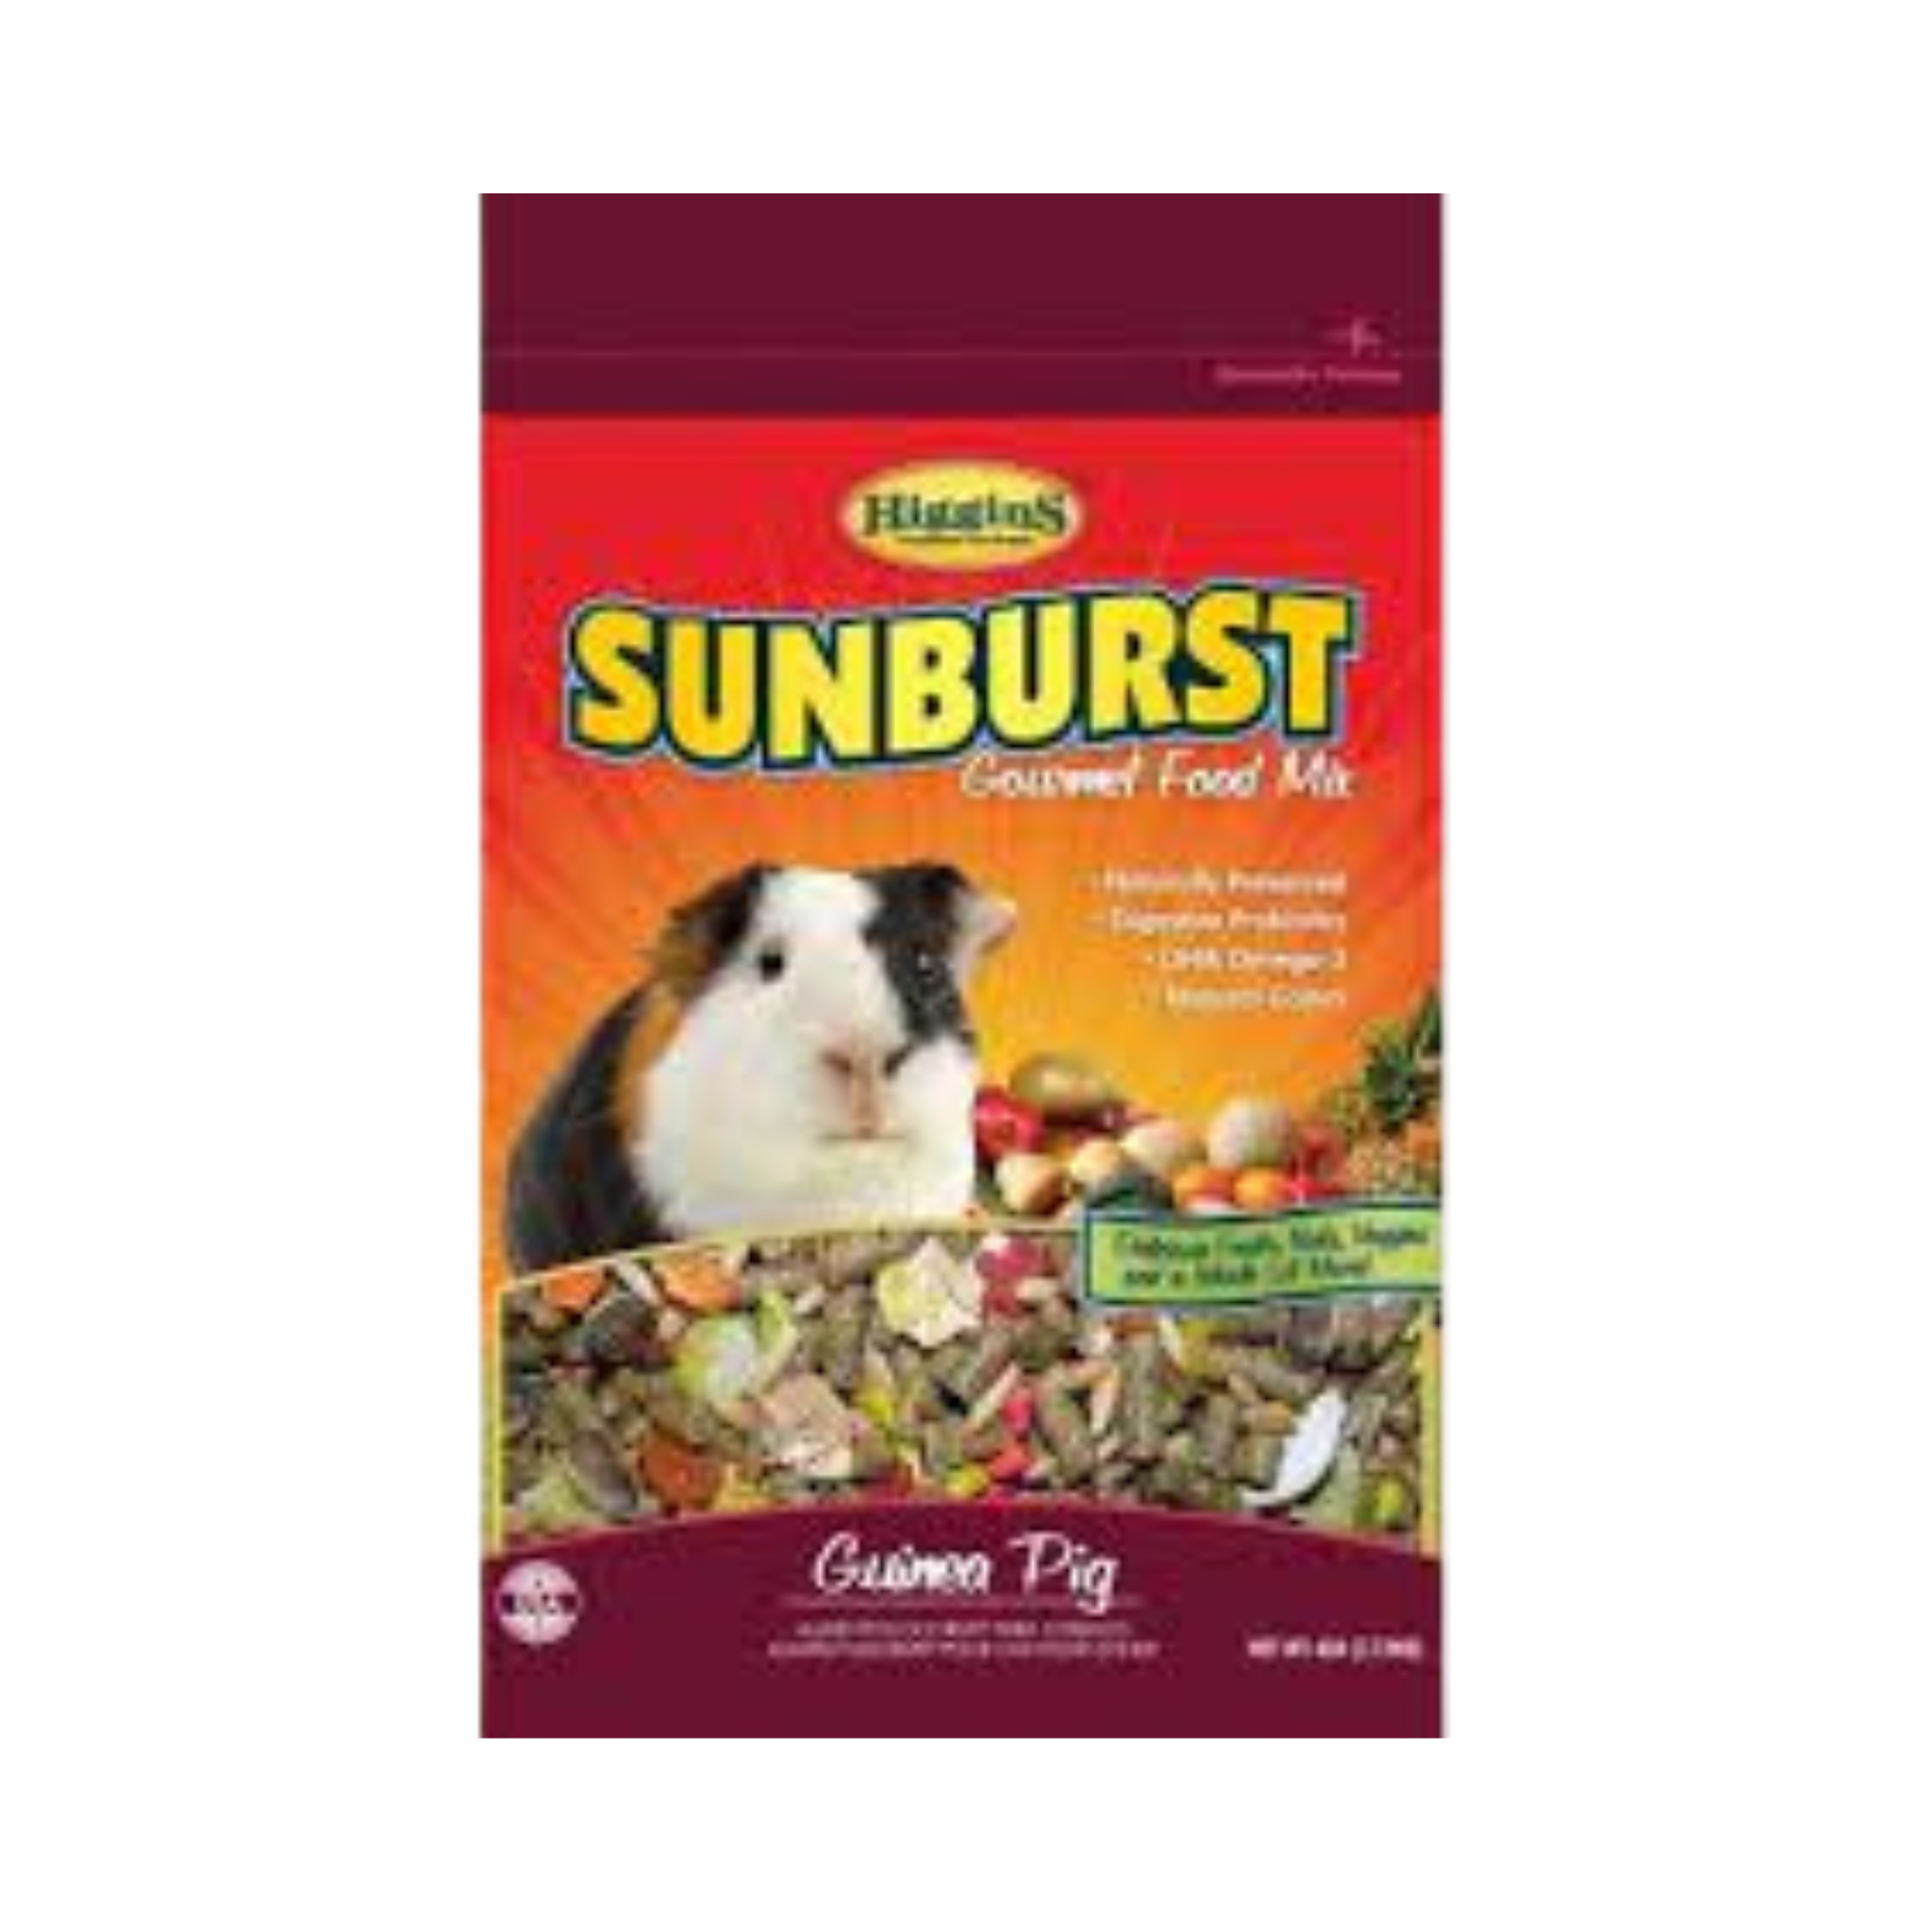 Higgins Sunburst Gourmet Guinea Pig Food